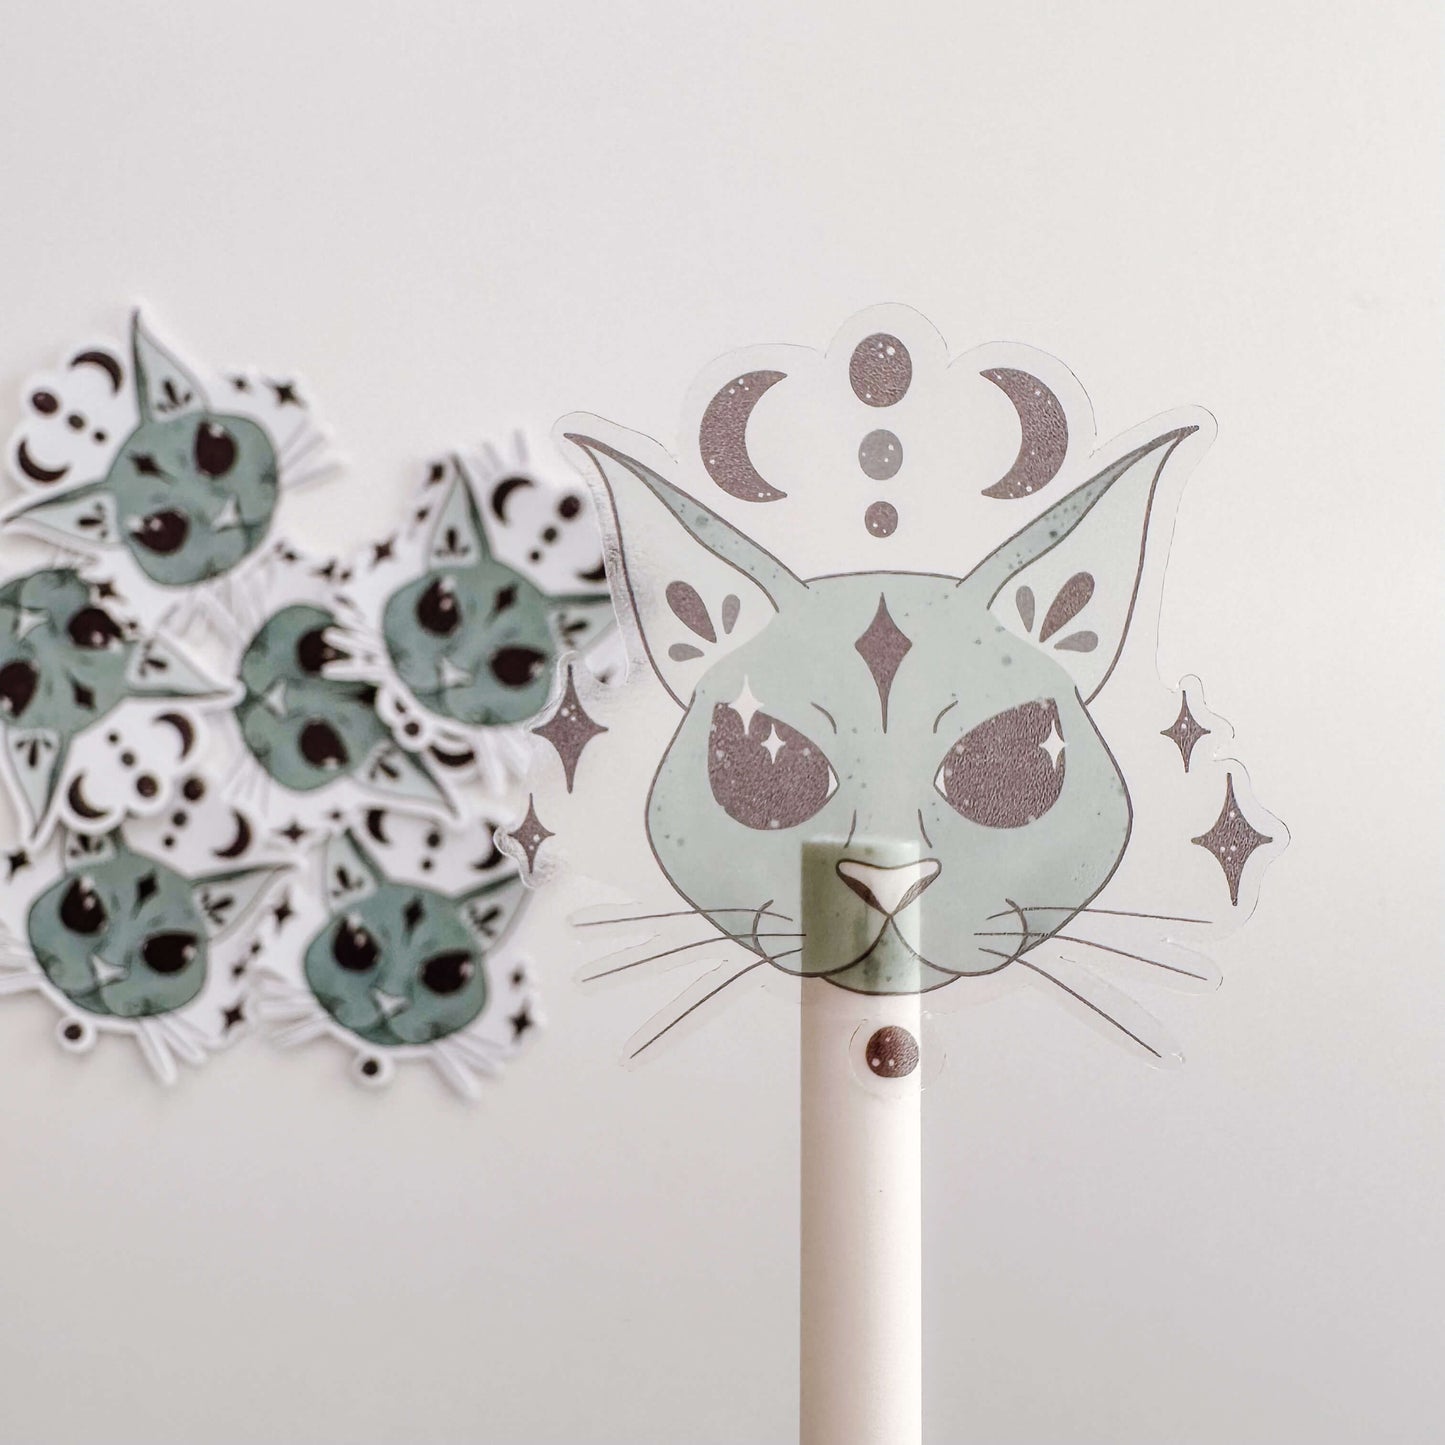 Mystic cat sticker - clear vinyl